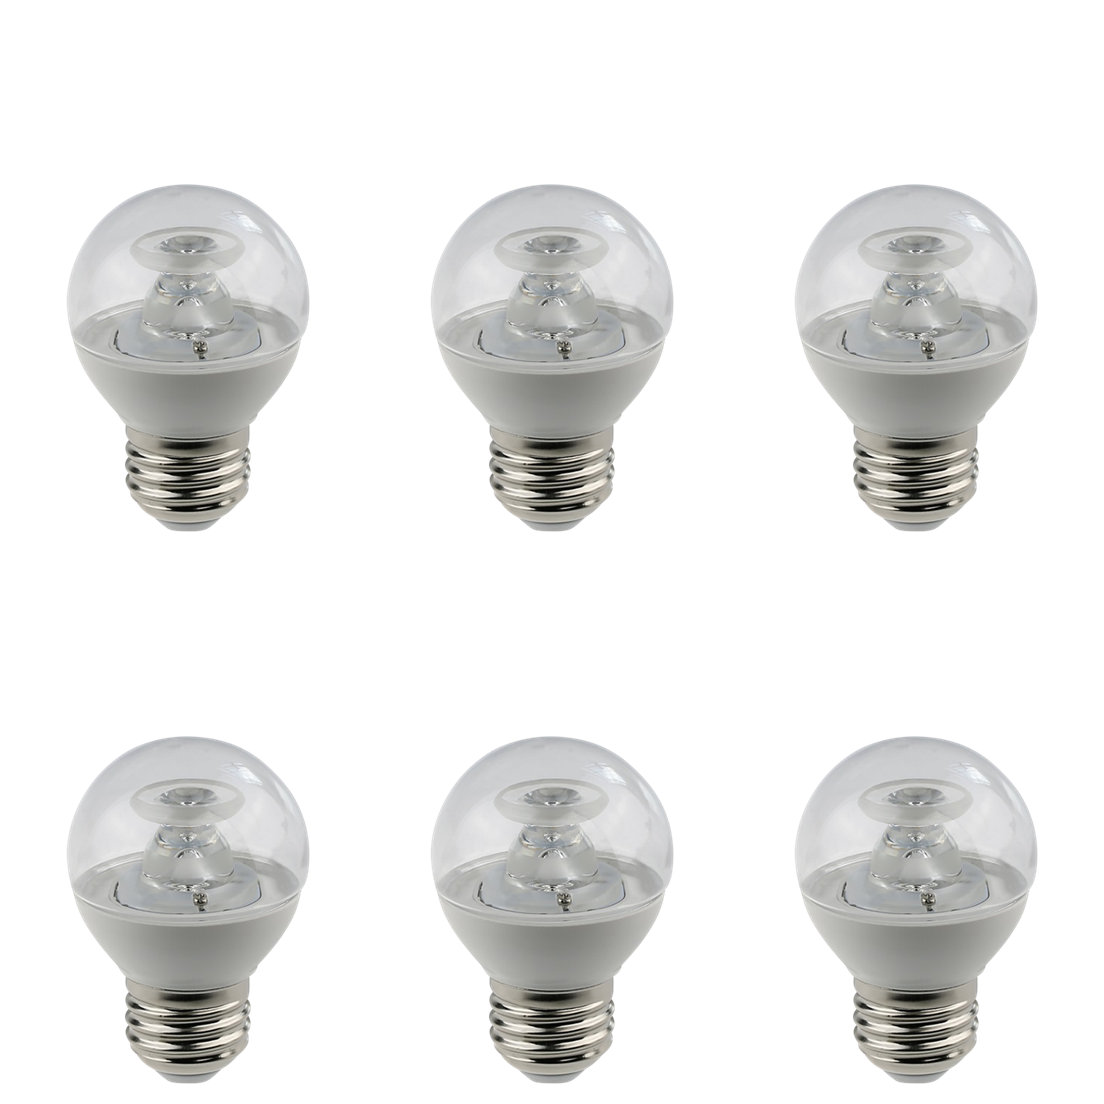 Warm White A15 Appliance Light Bulb, 40W Equivalent, 120V, 2700K